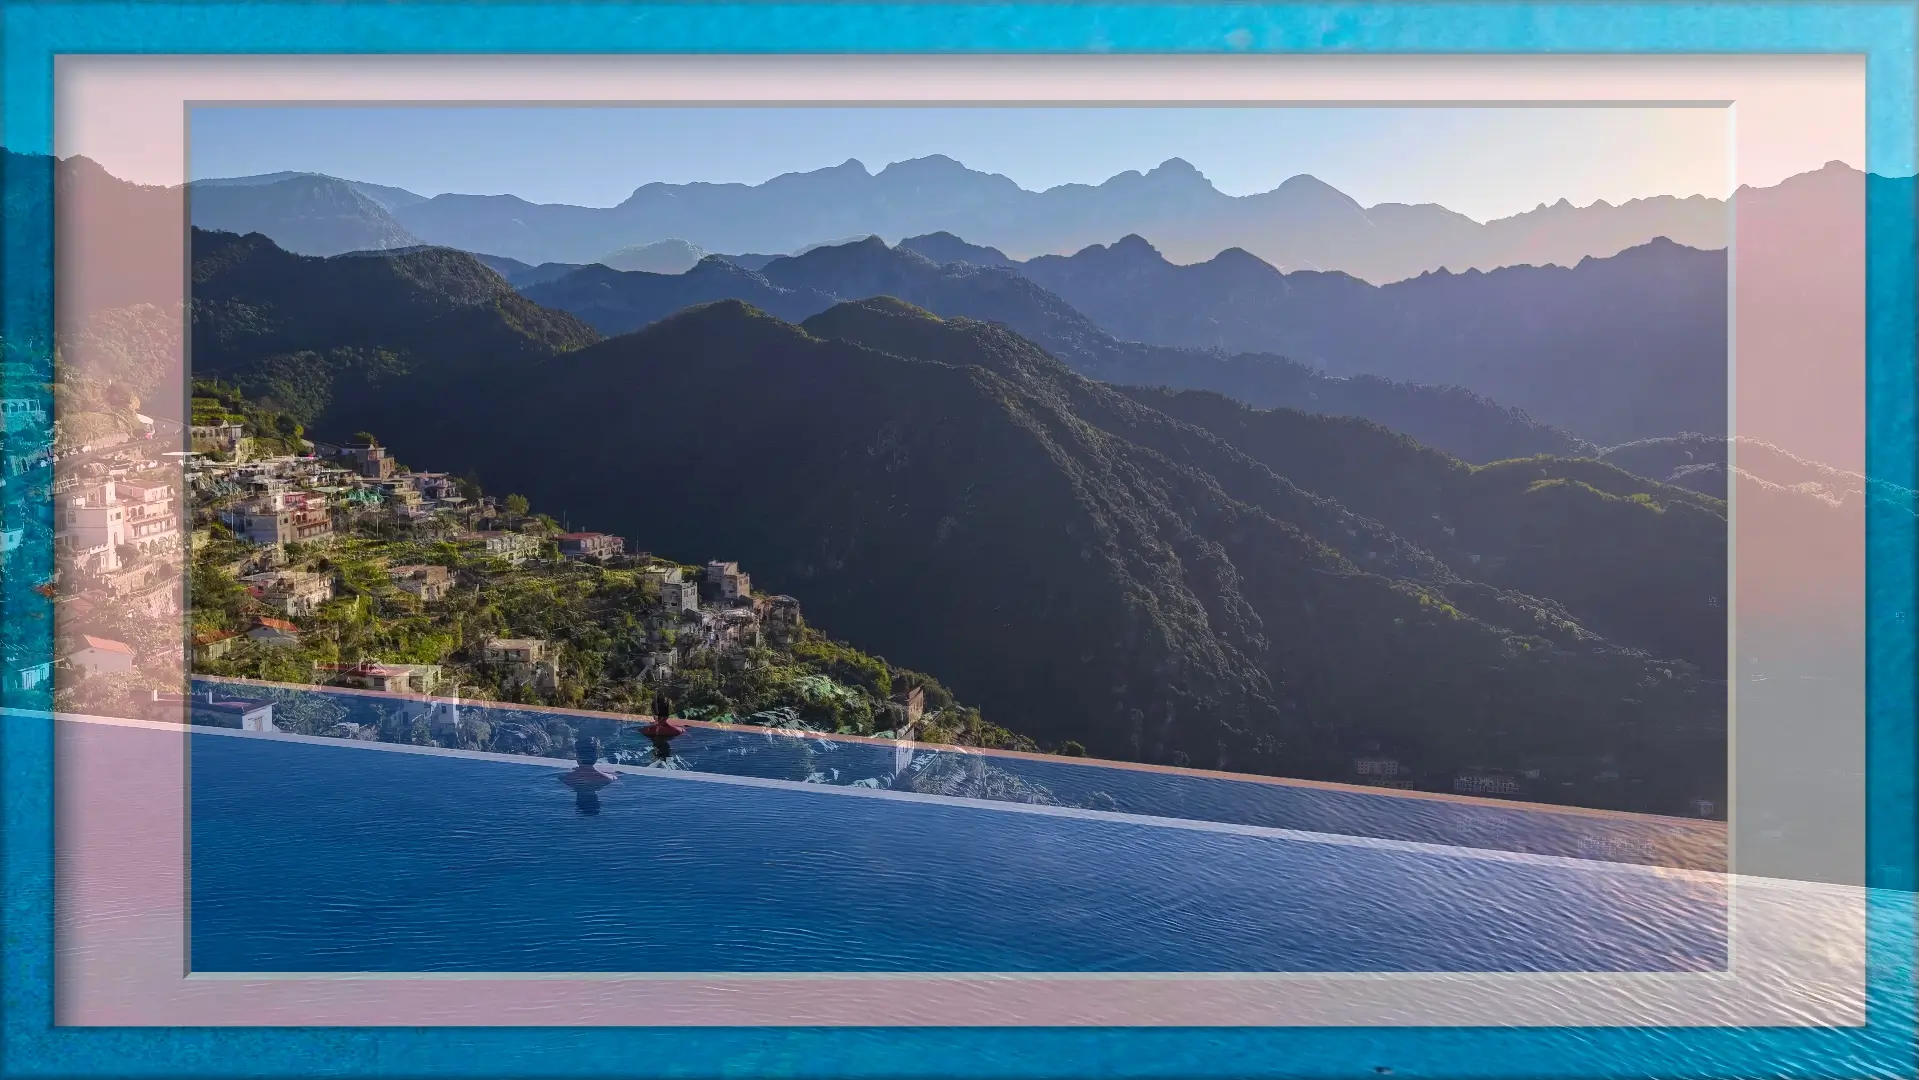 Infinity pool overlooking the Amalfi Coast at Belmond Hotel Caruso